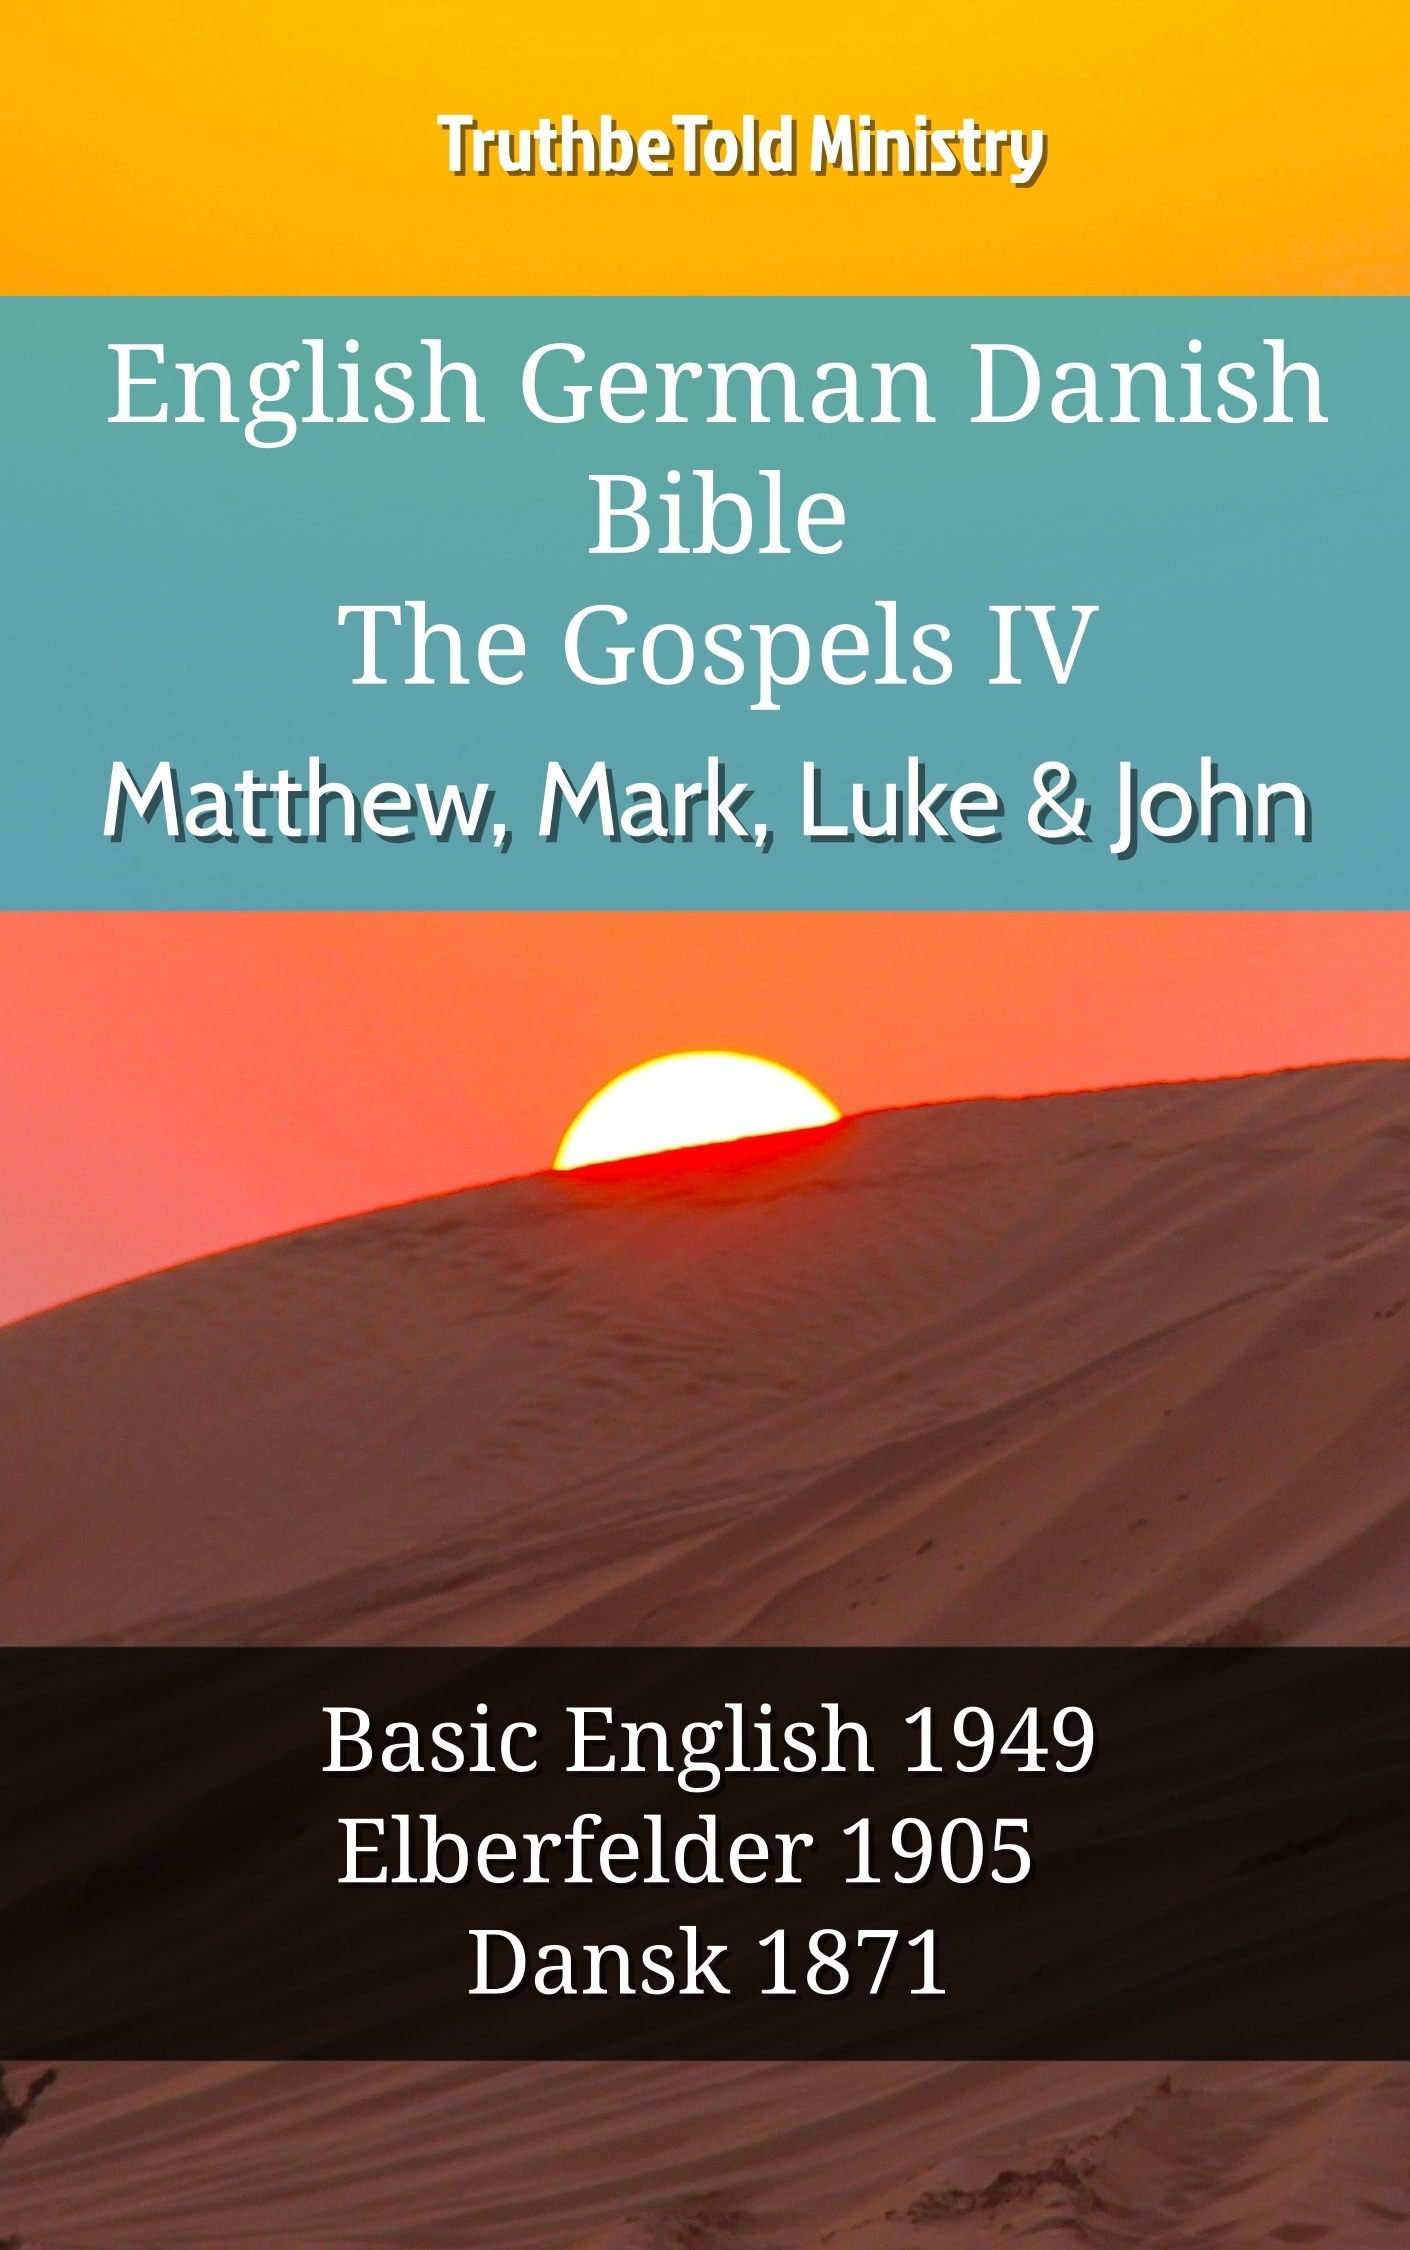 English German Danish Bible - The Gospels IV - Matthew, Mark, Luke & John